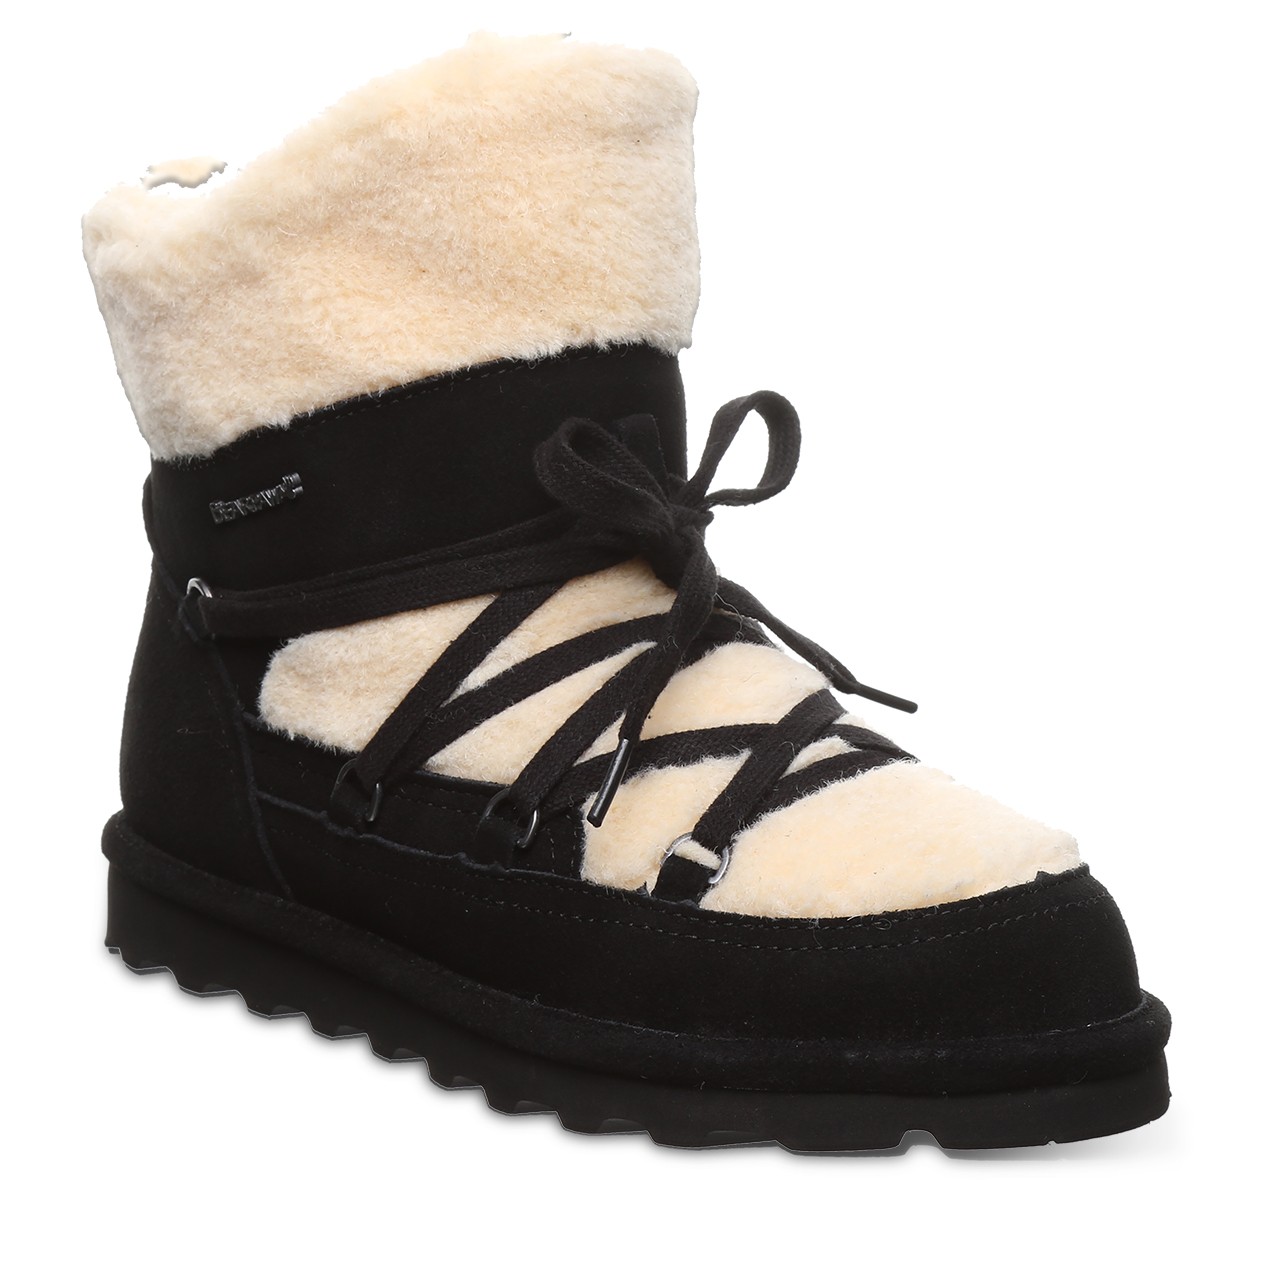 Bearpaw Anastacia Women's Arctic-style Boots